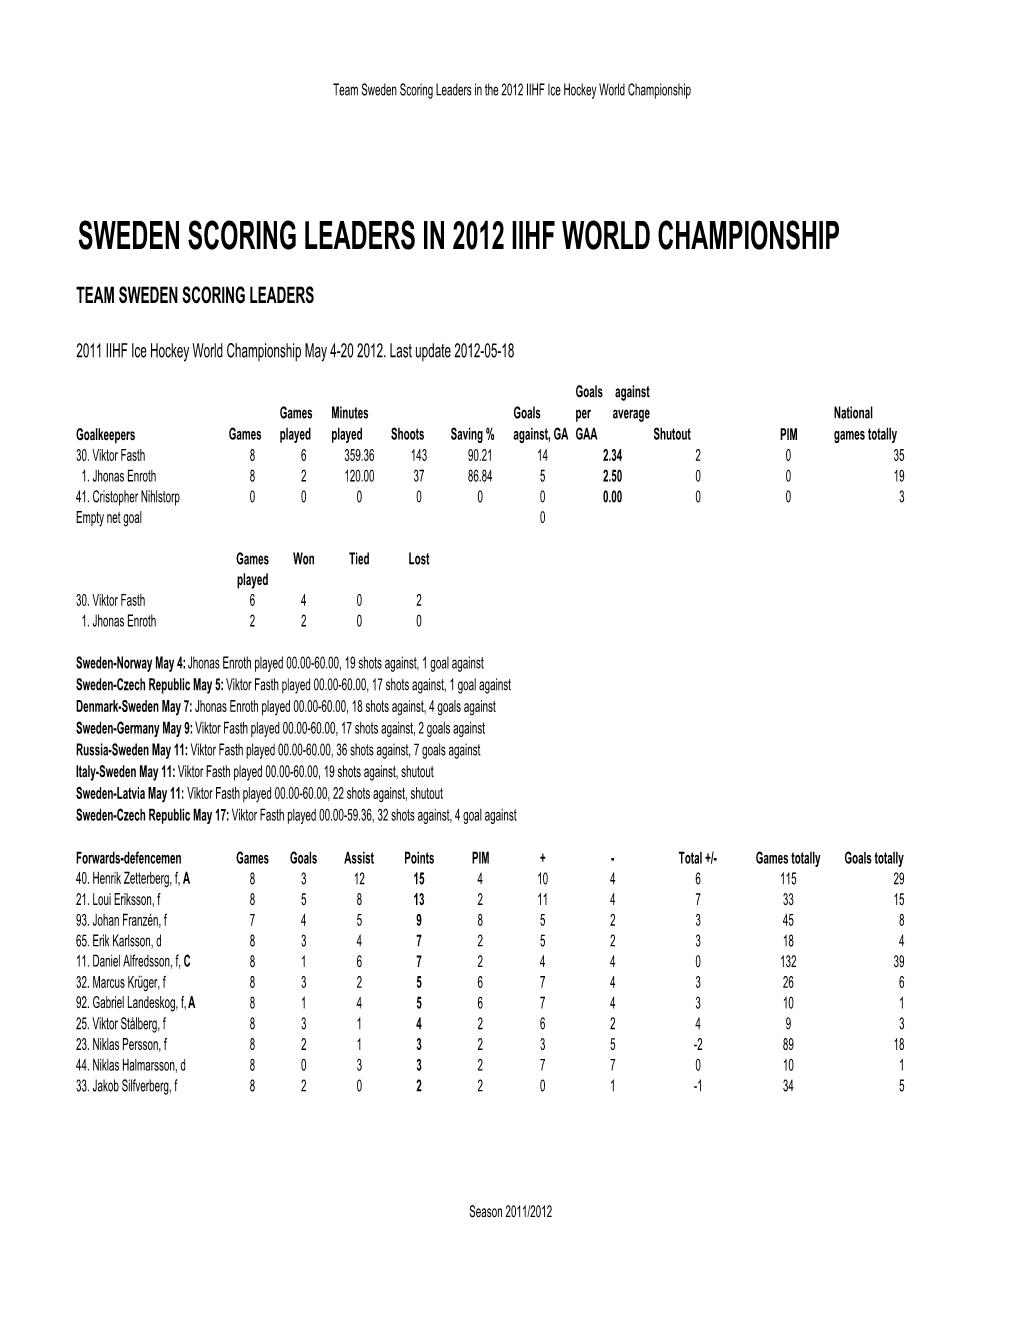 Sweden Scoring Leaders in 2012 Iihf World Championship